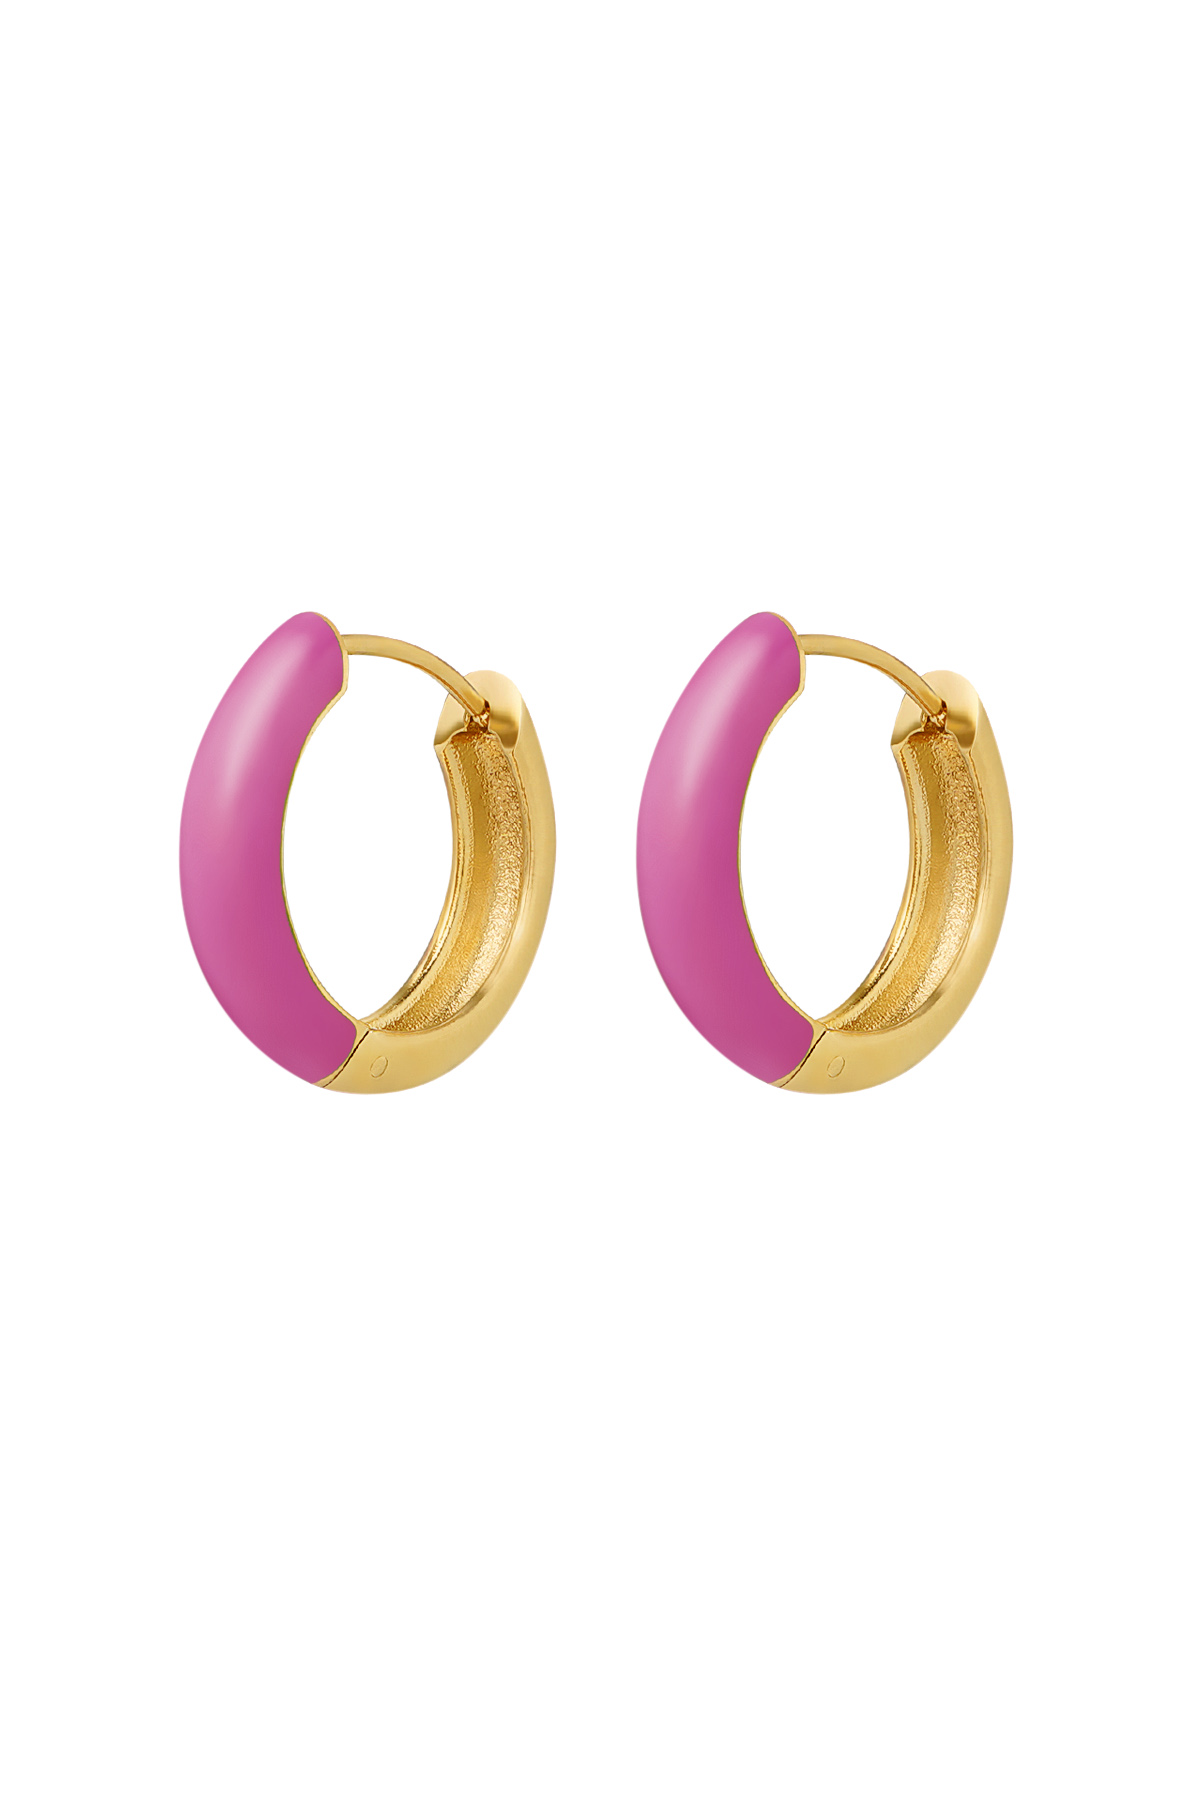 earrings pink - gold